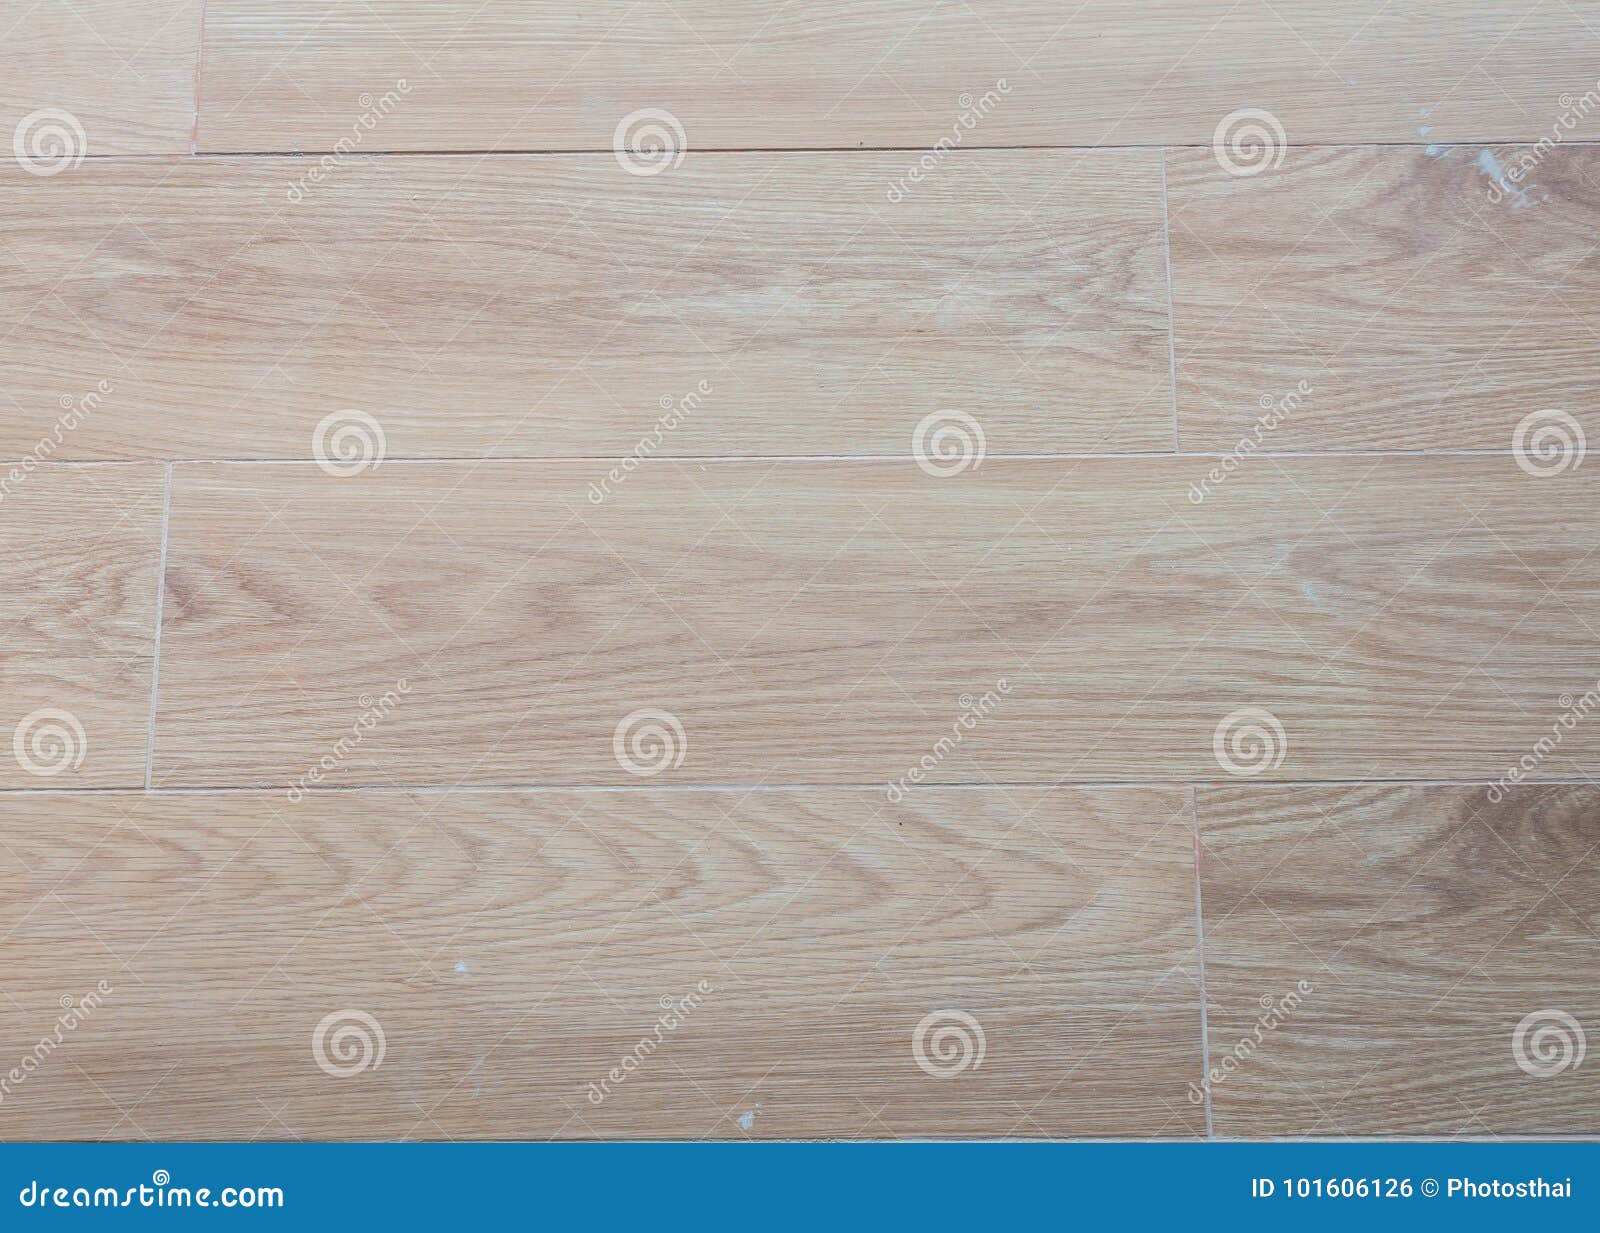 Scrub Wood Floor Stock Photo Image Of Grunge Constrction 101606126